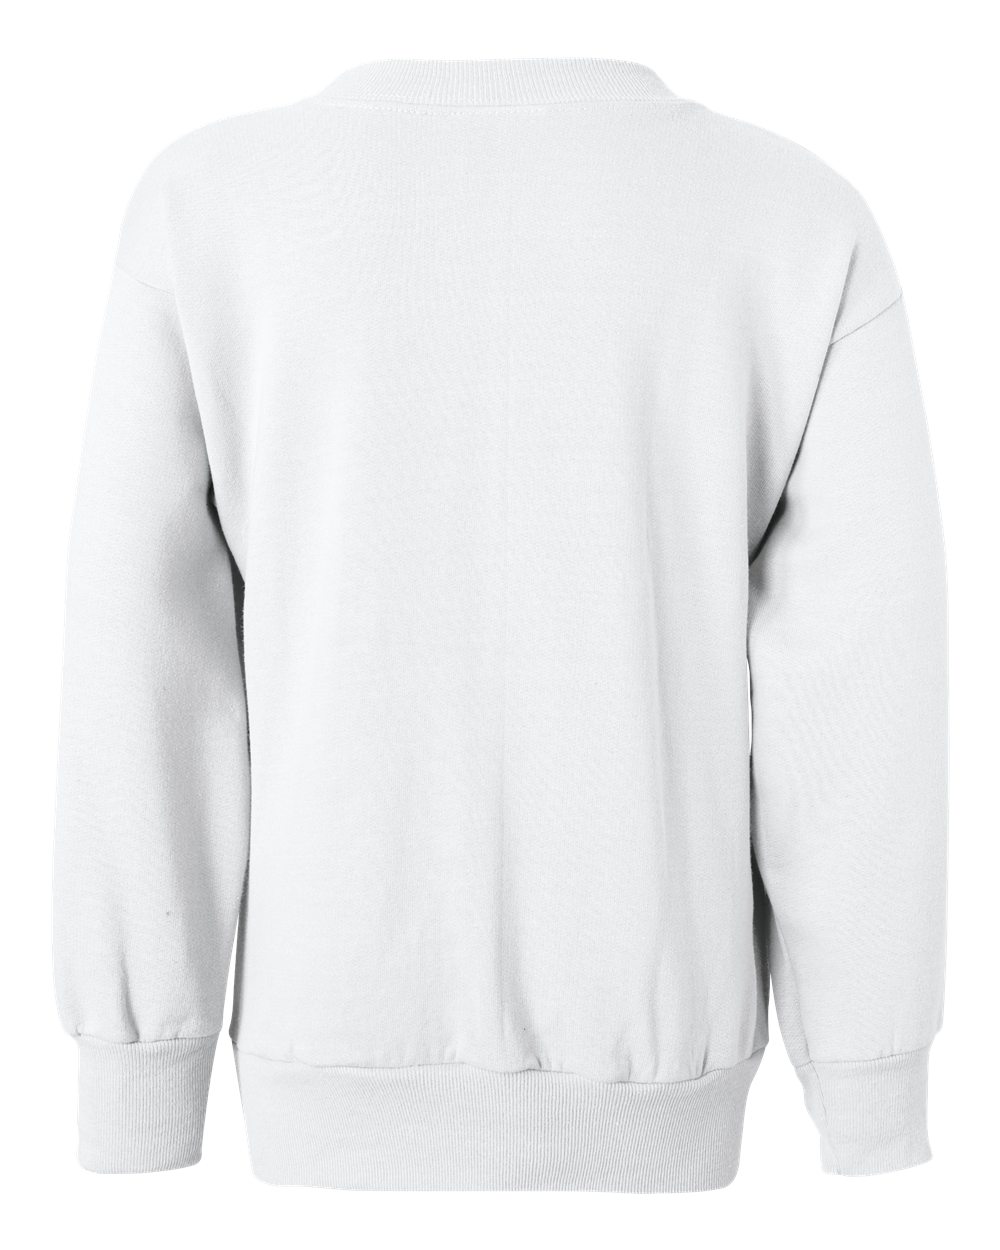 White Hanes® ComfortSoft® 100% Cotton T-Shirt - Blank